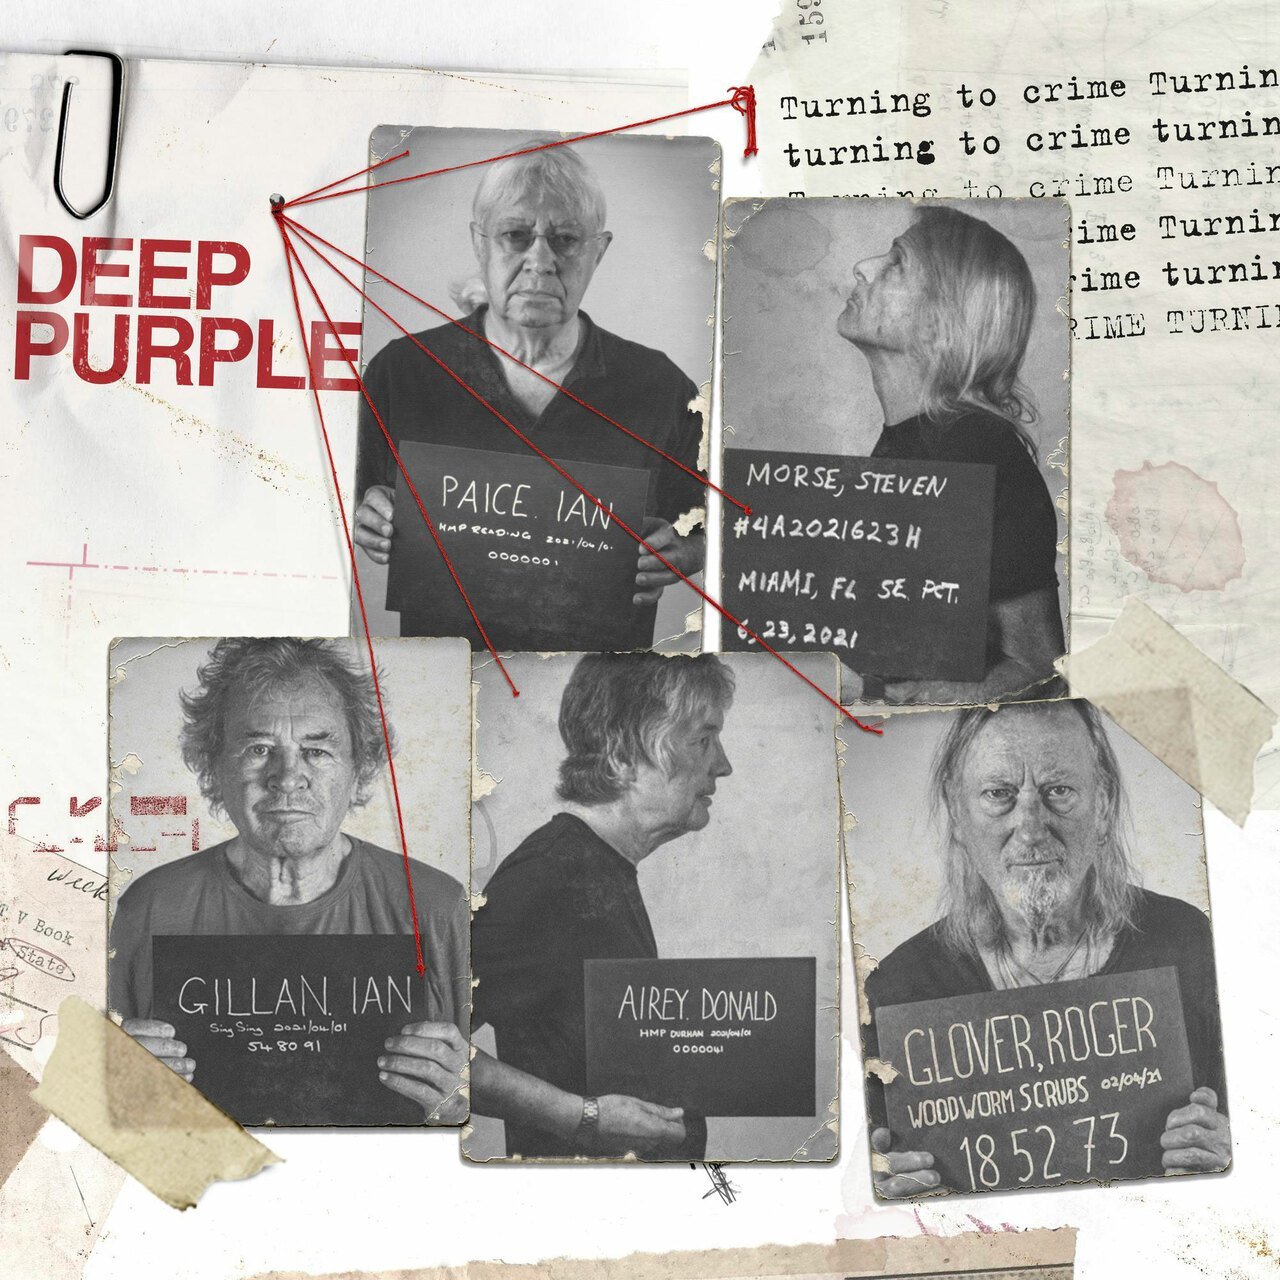 DEEP PURPLE - TURNING TO CRIME Vinyl LP